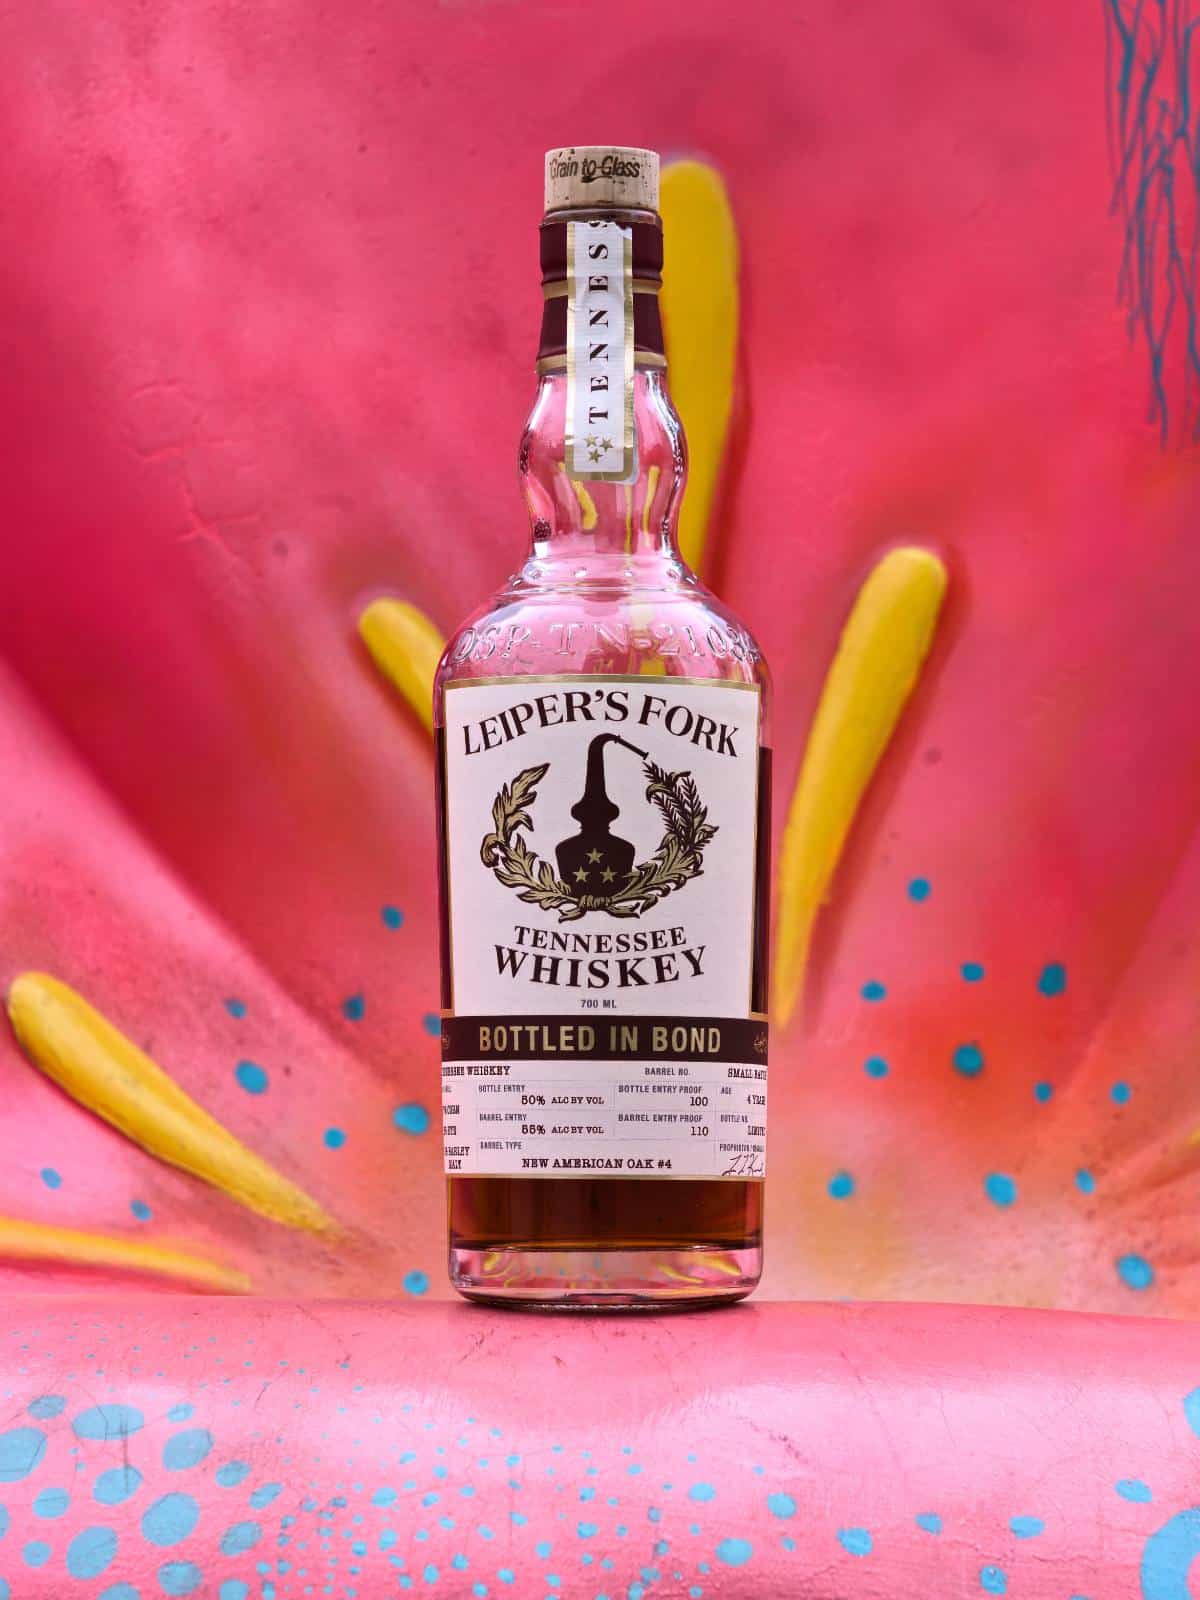 leiper’s fork bottled in bond tennessee whiskey featured